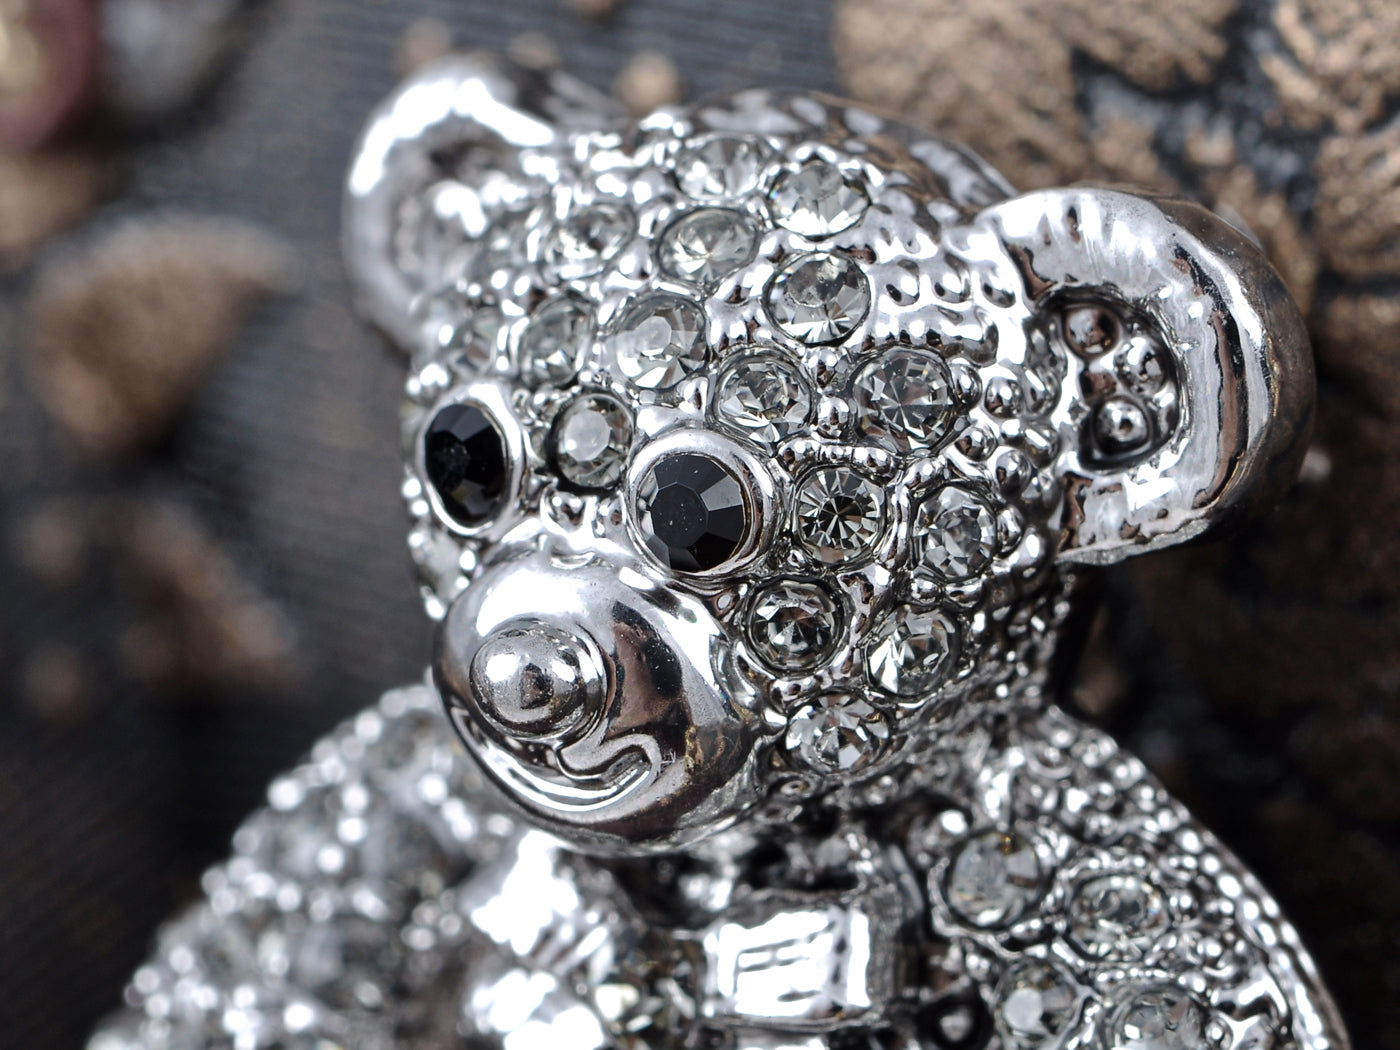 Vintage Valentine Silver Teddy Bear Stuffed Animal Lapel Brooch Pin